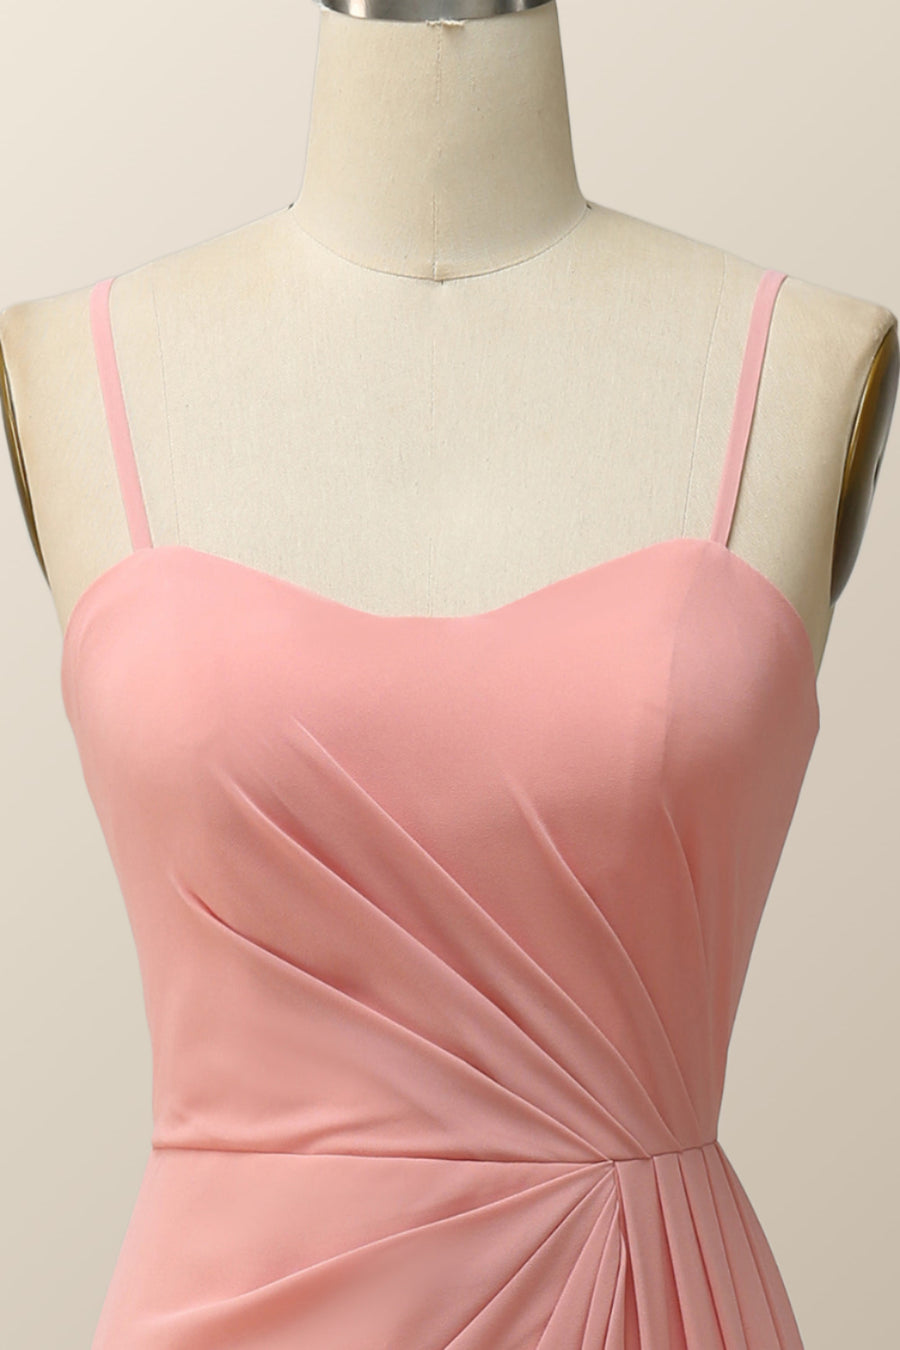 Spaghetti Straps Blush Pink Chiffon A-line Long Bridesmaid Dress